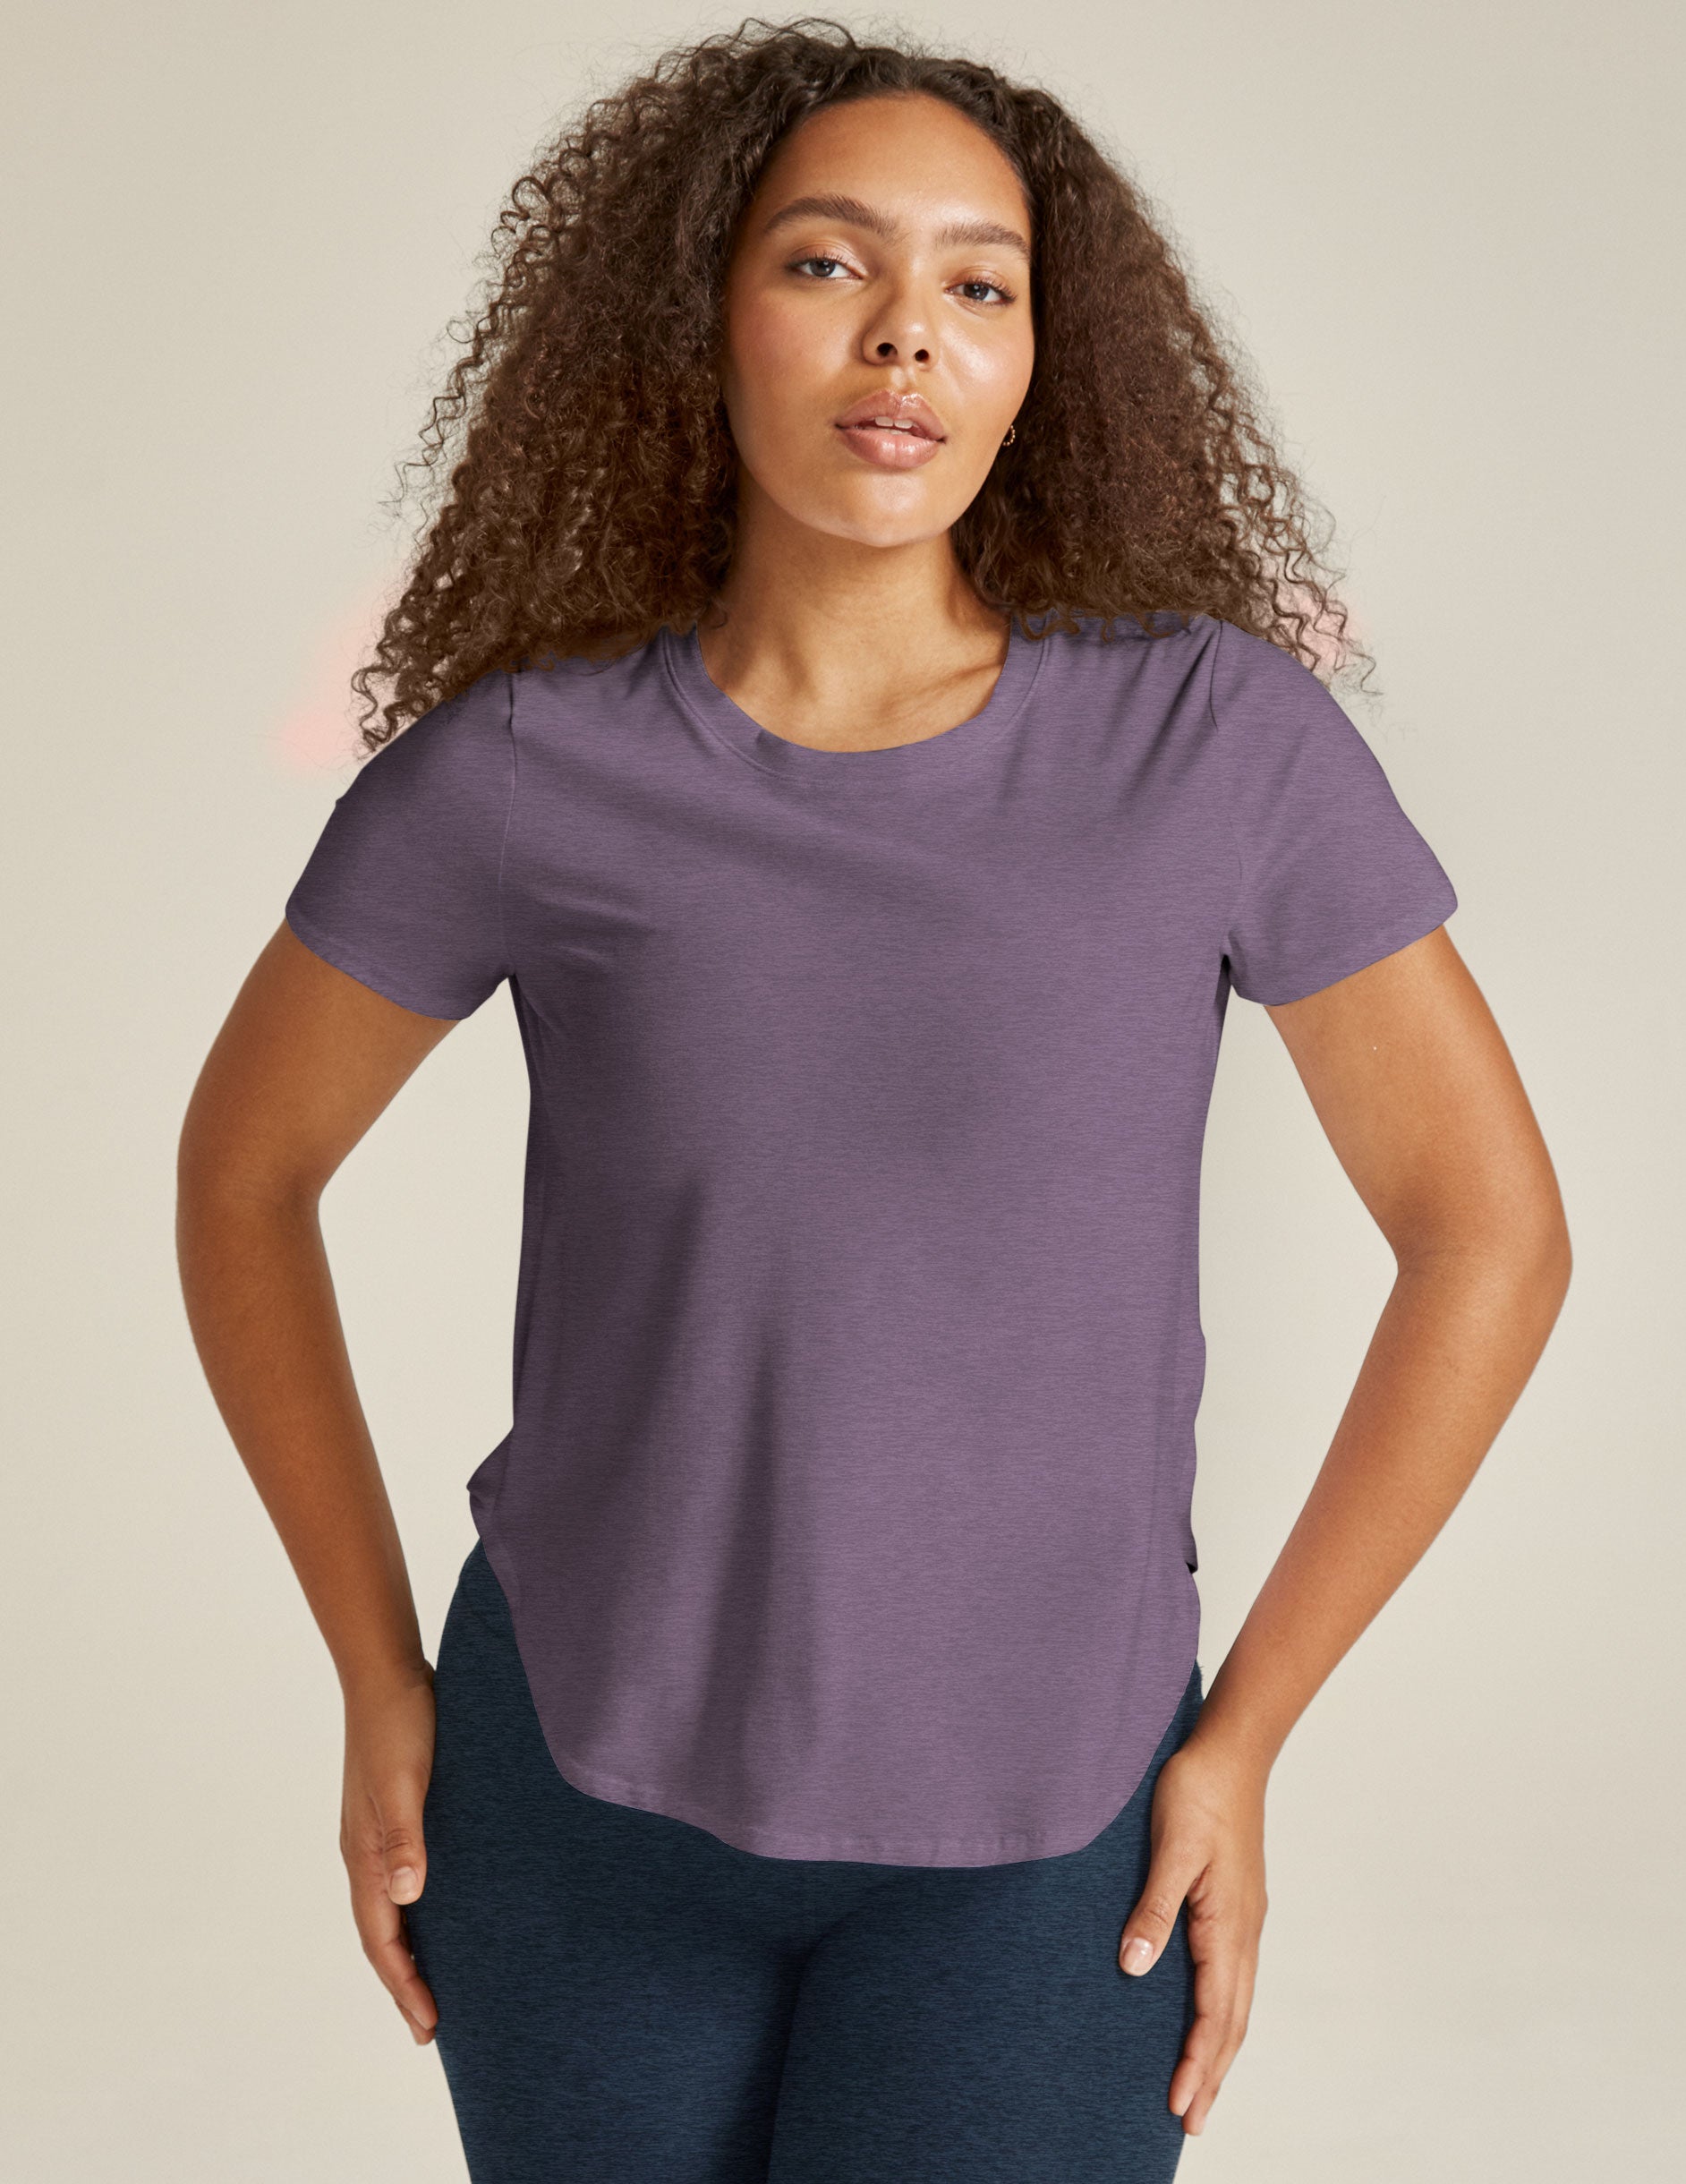 gaiam women's graphic active crewneck tank top - yoga shirt for women -  purple wine heather, small